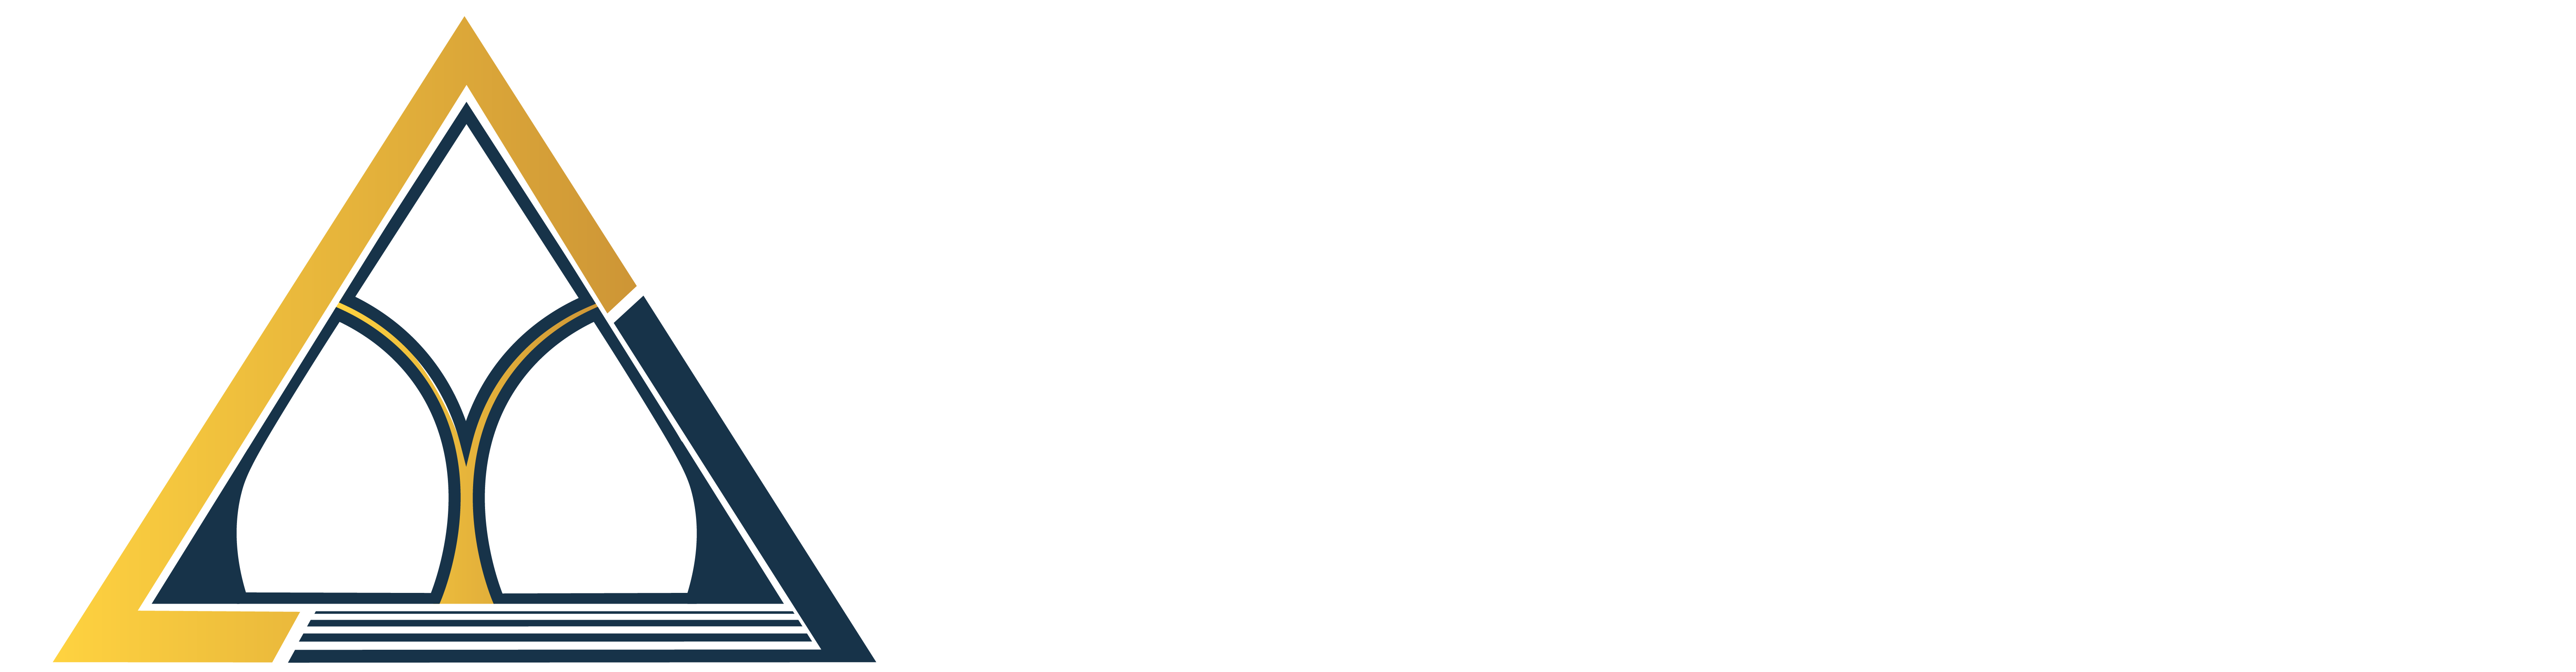 Thaveesin Funeral